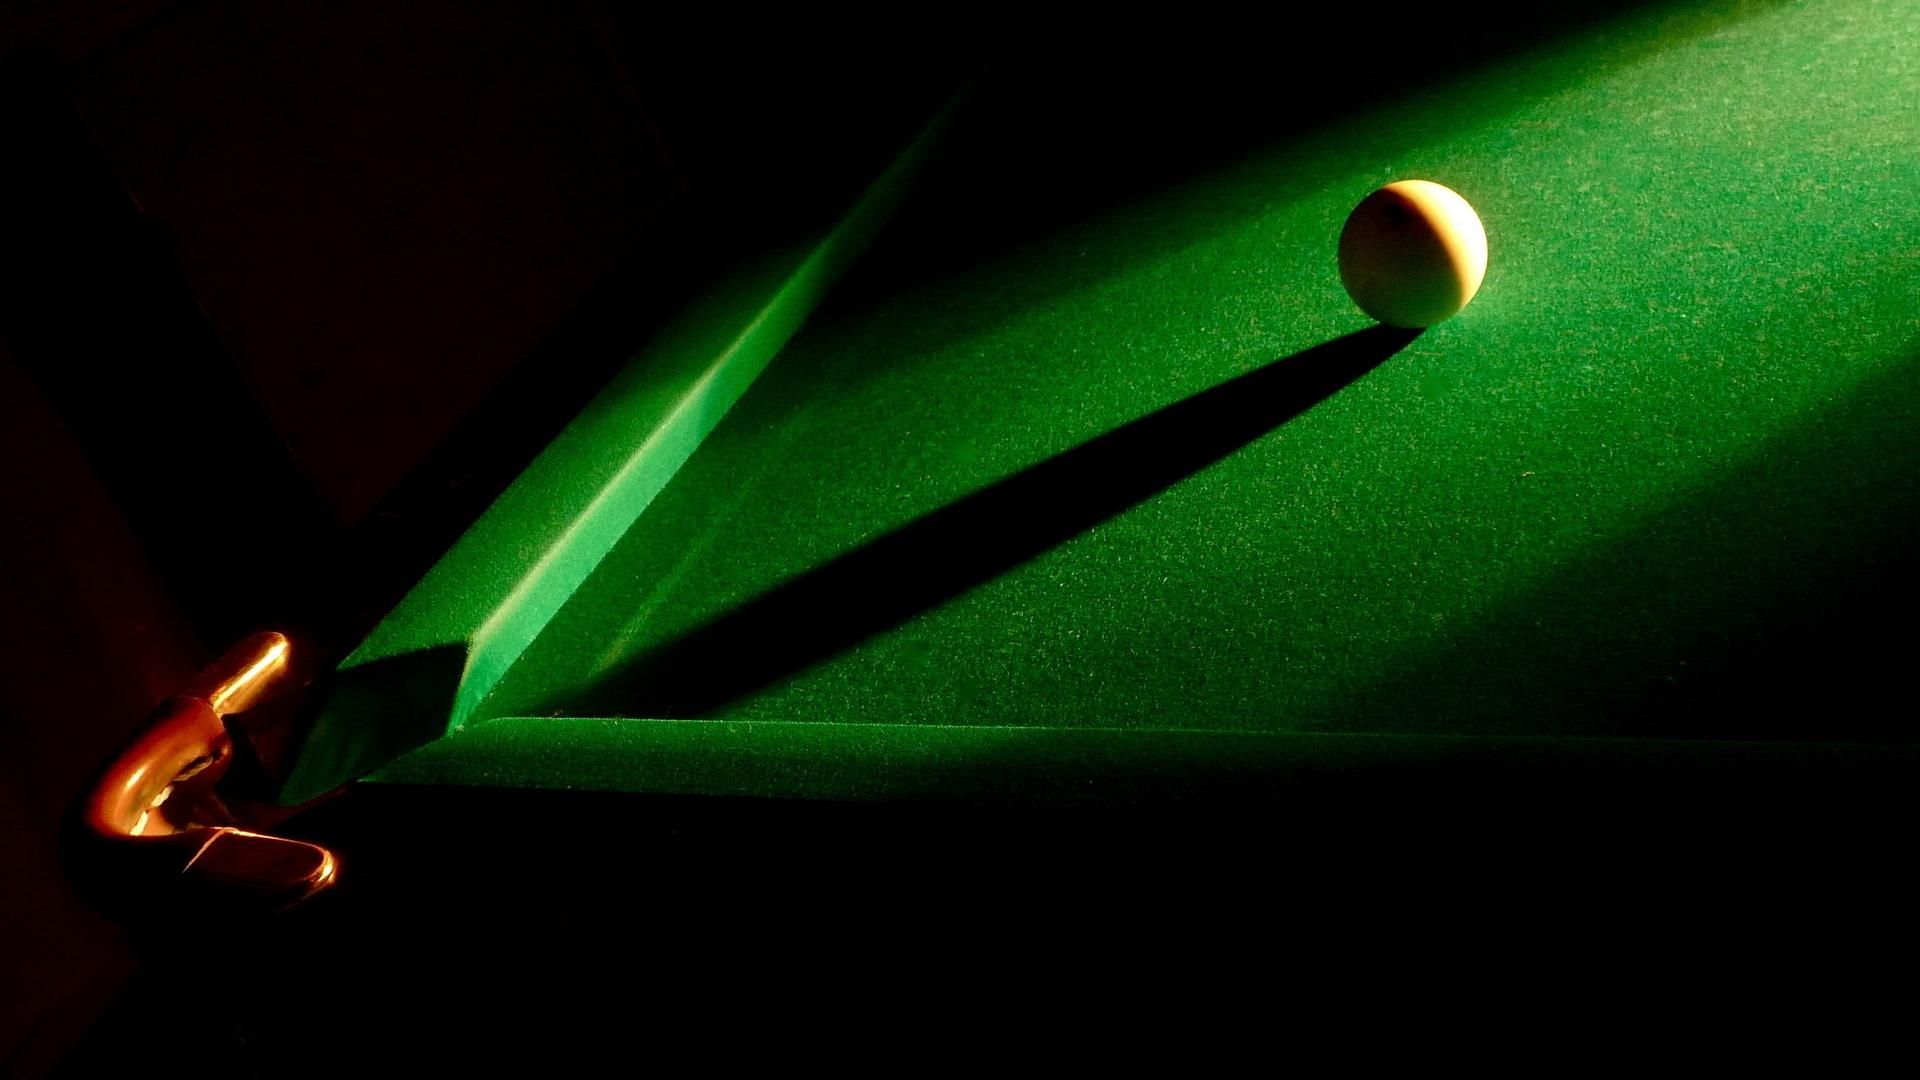 HD Wallpaper Sports Snooker Pool Image Cricket